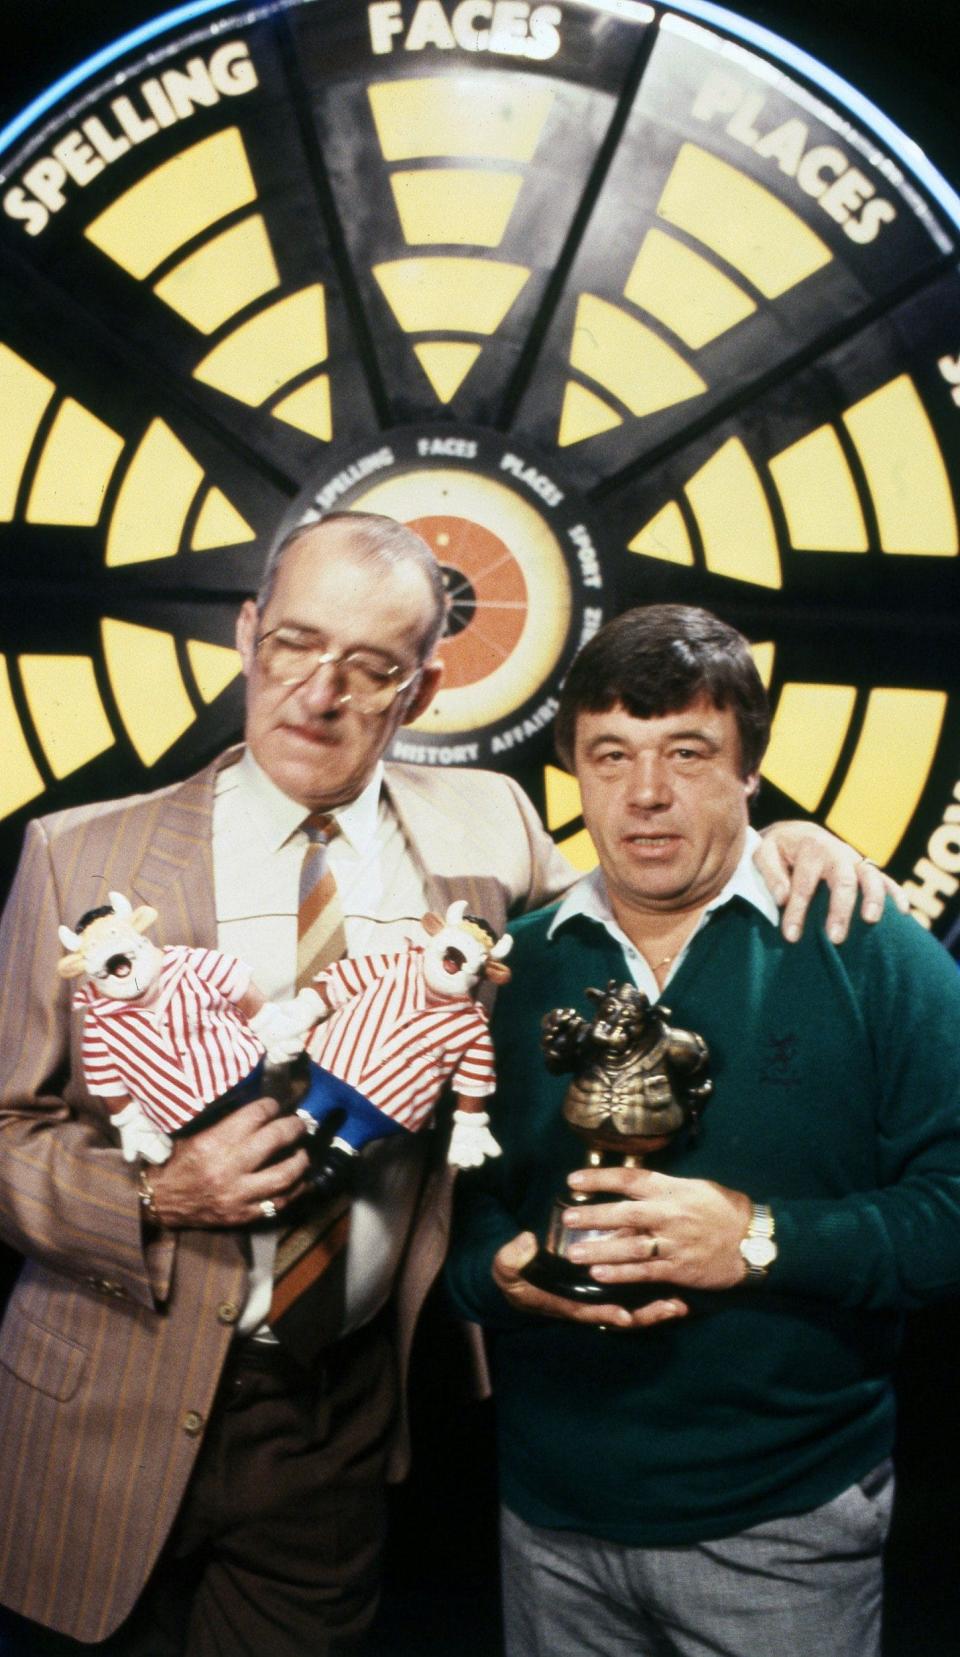 Tony Green with Bullseye host Jim Bowen in 1985